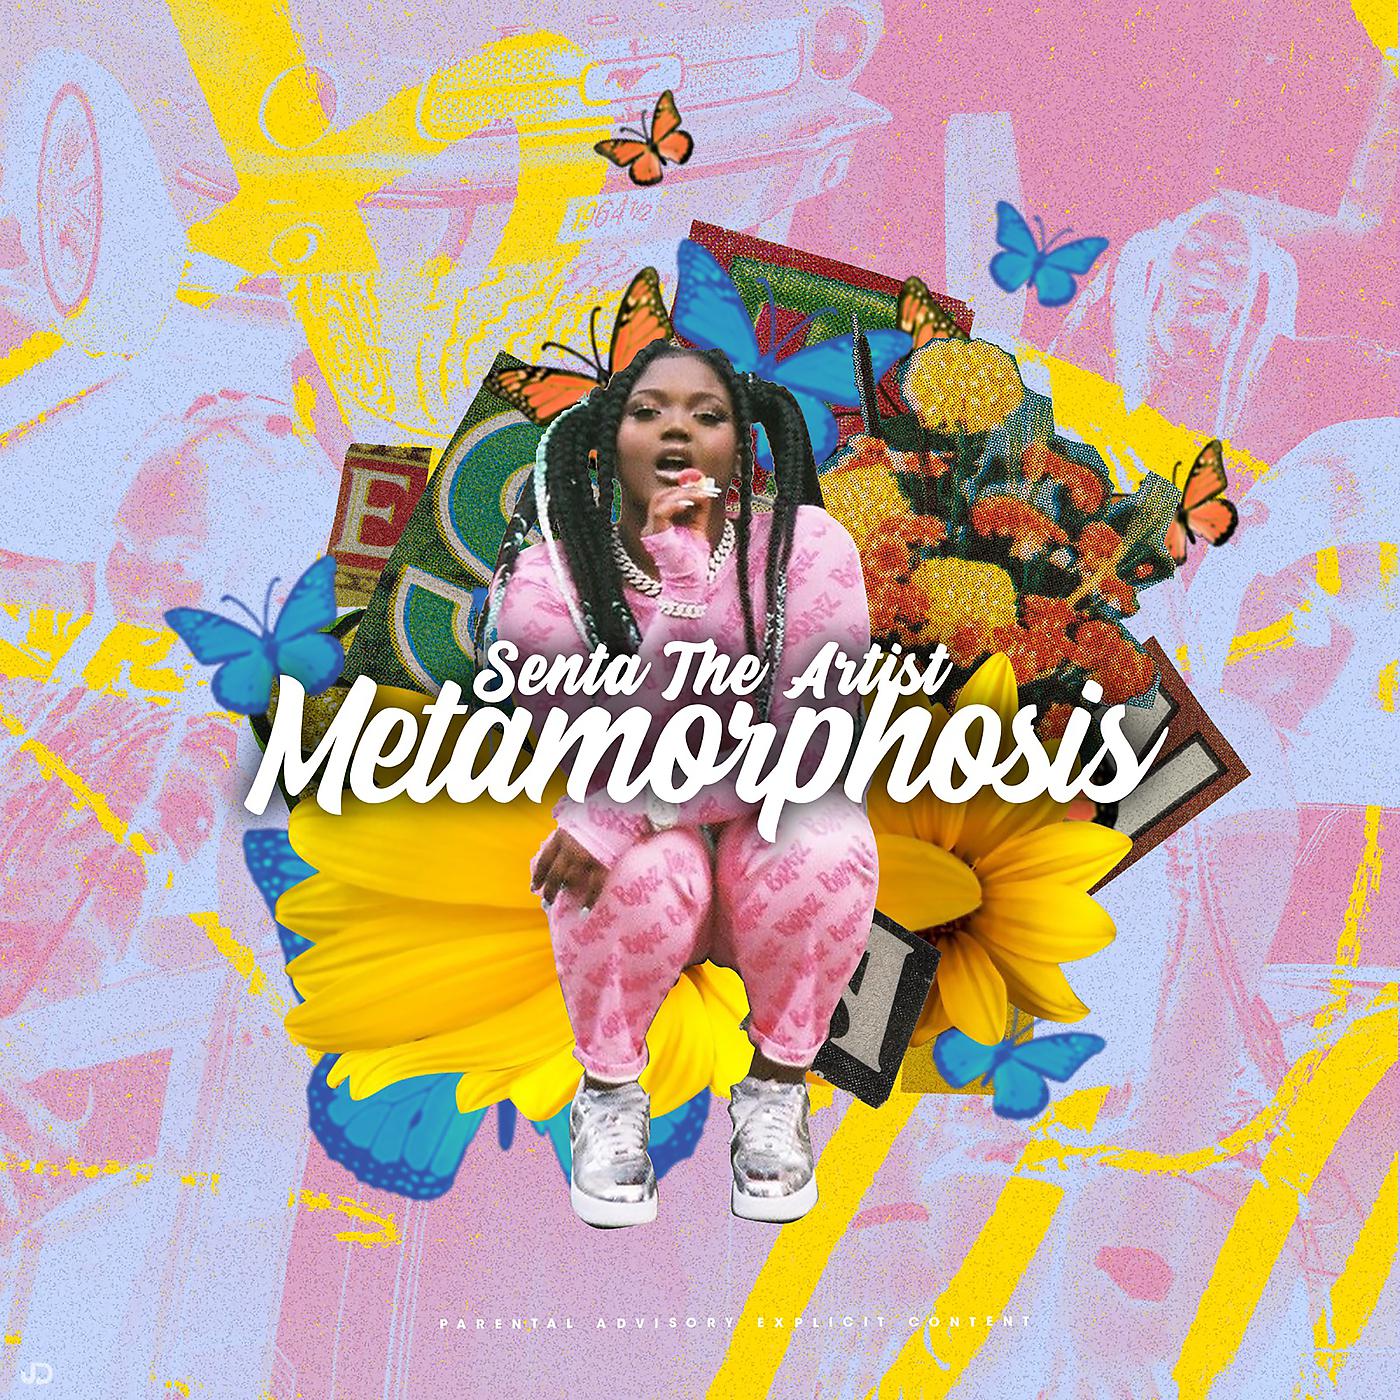 Постер альбома Metamorphosis